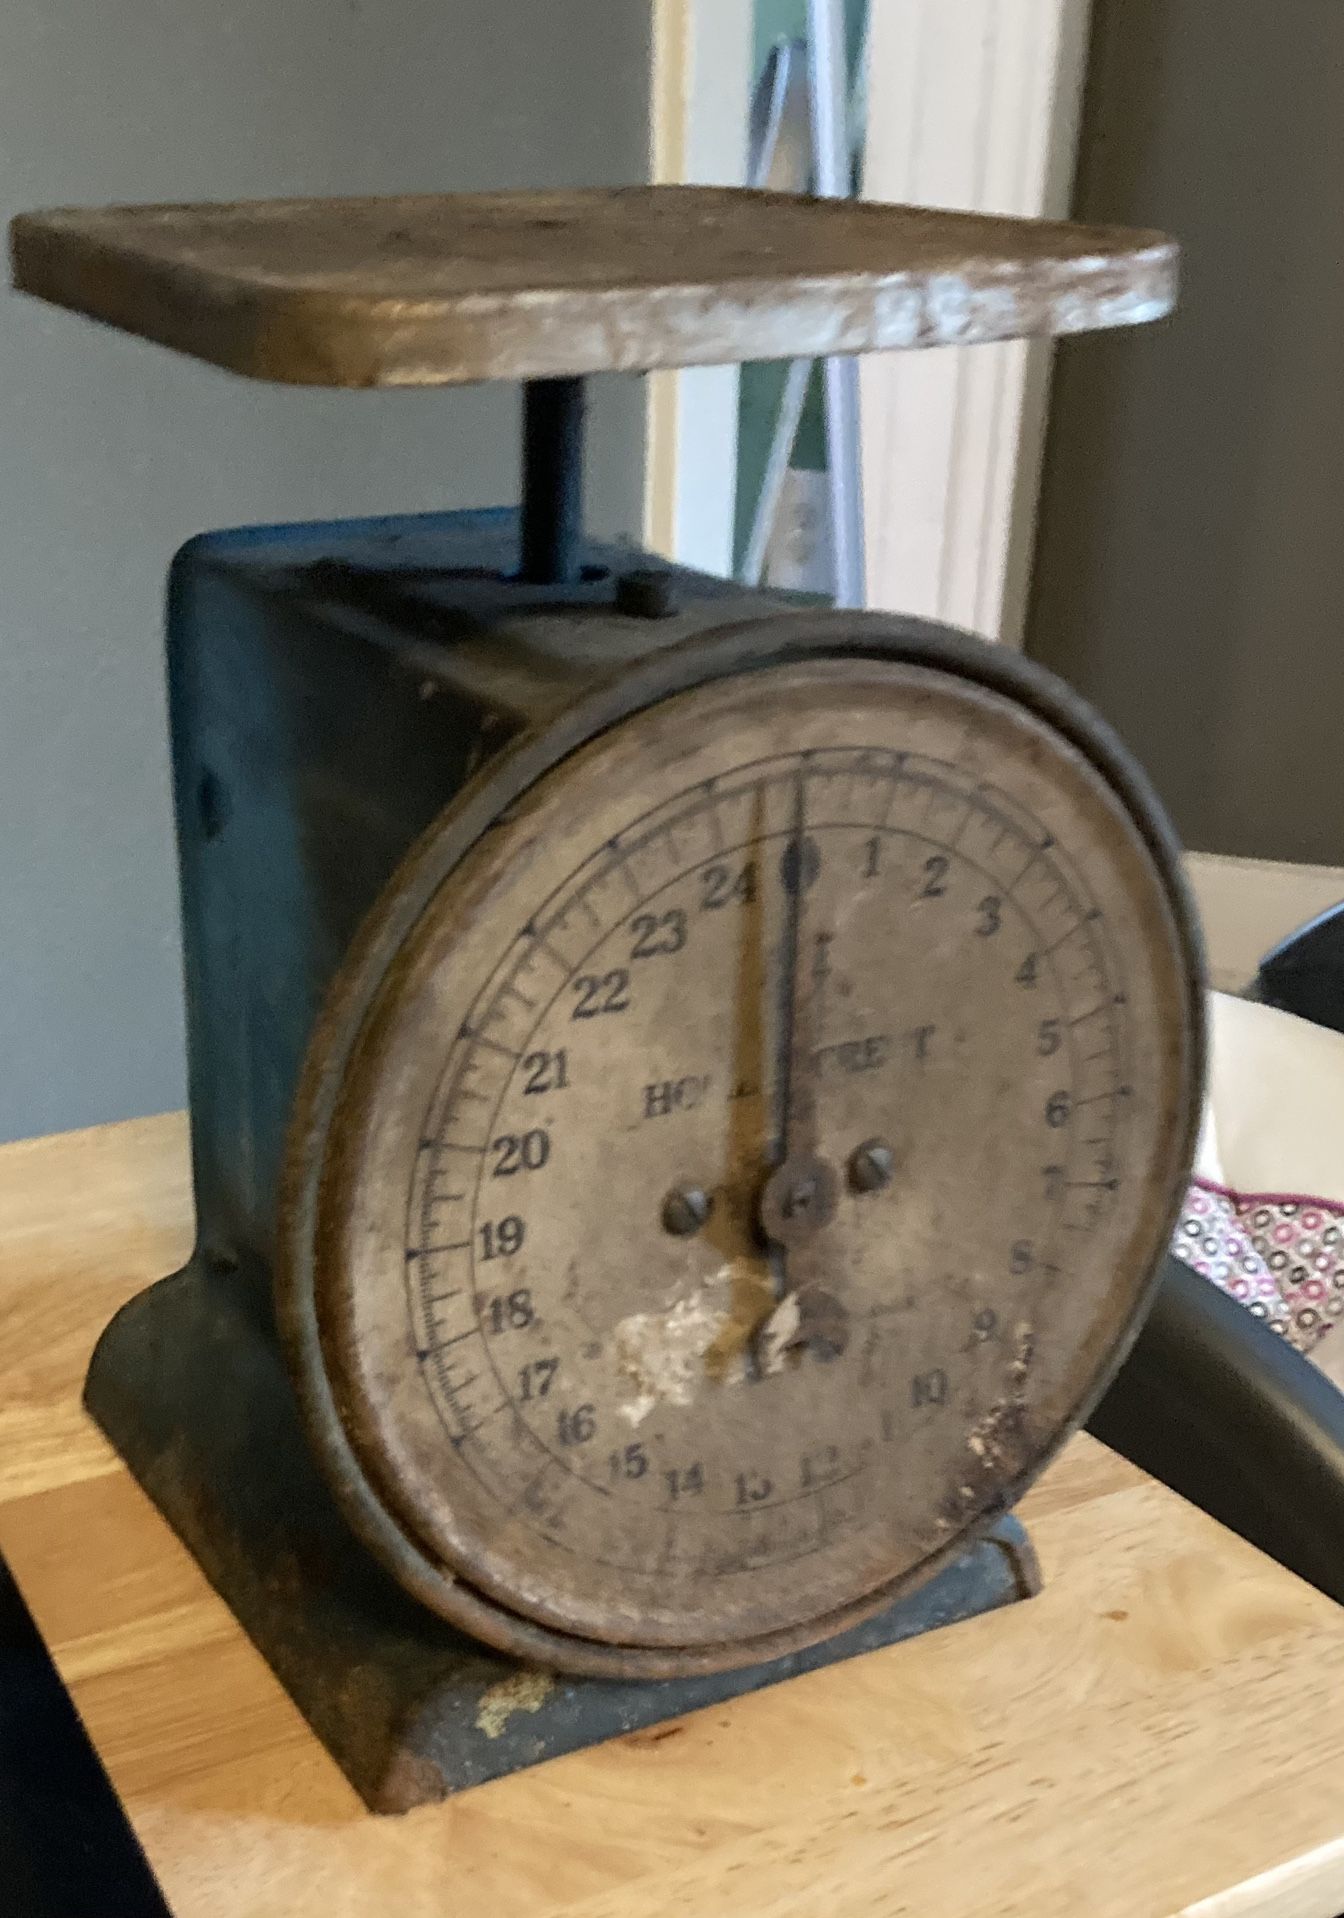 Antique Kitchen Scale